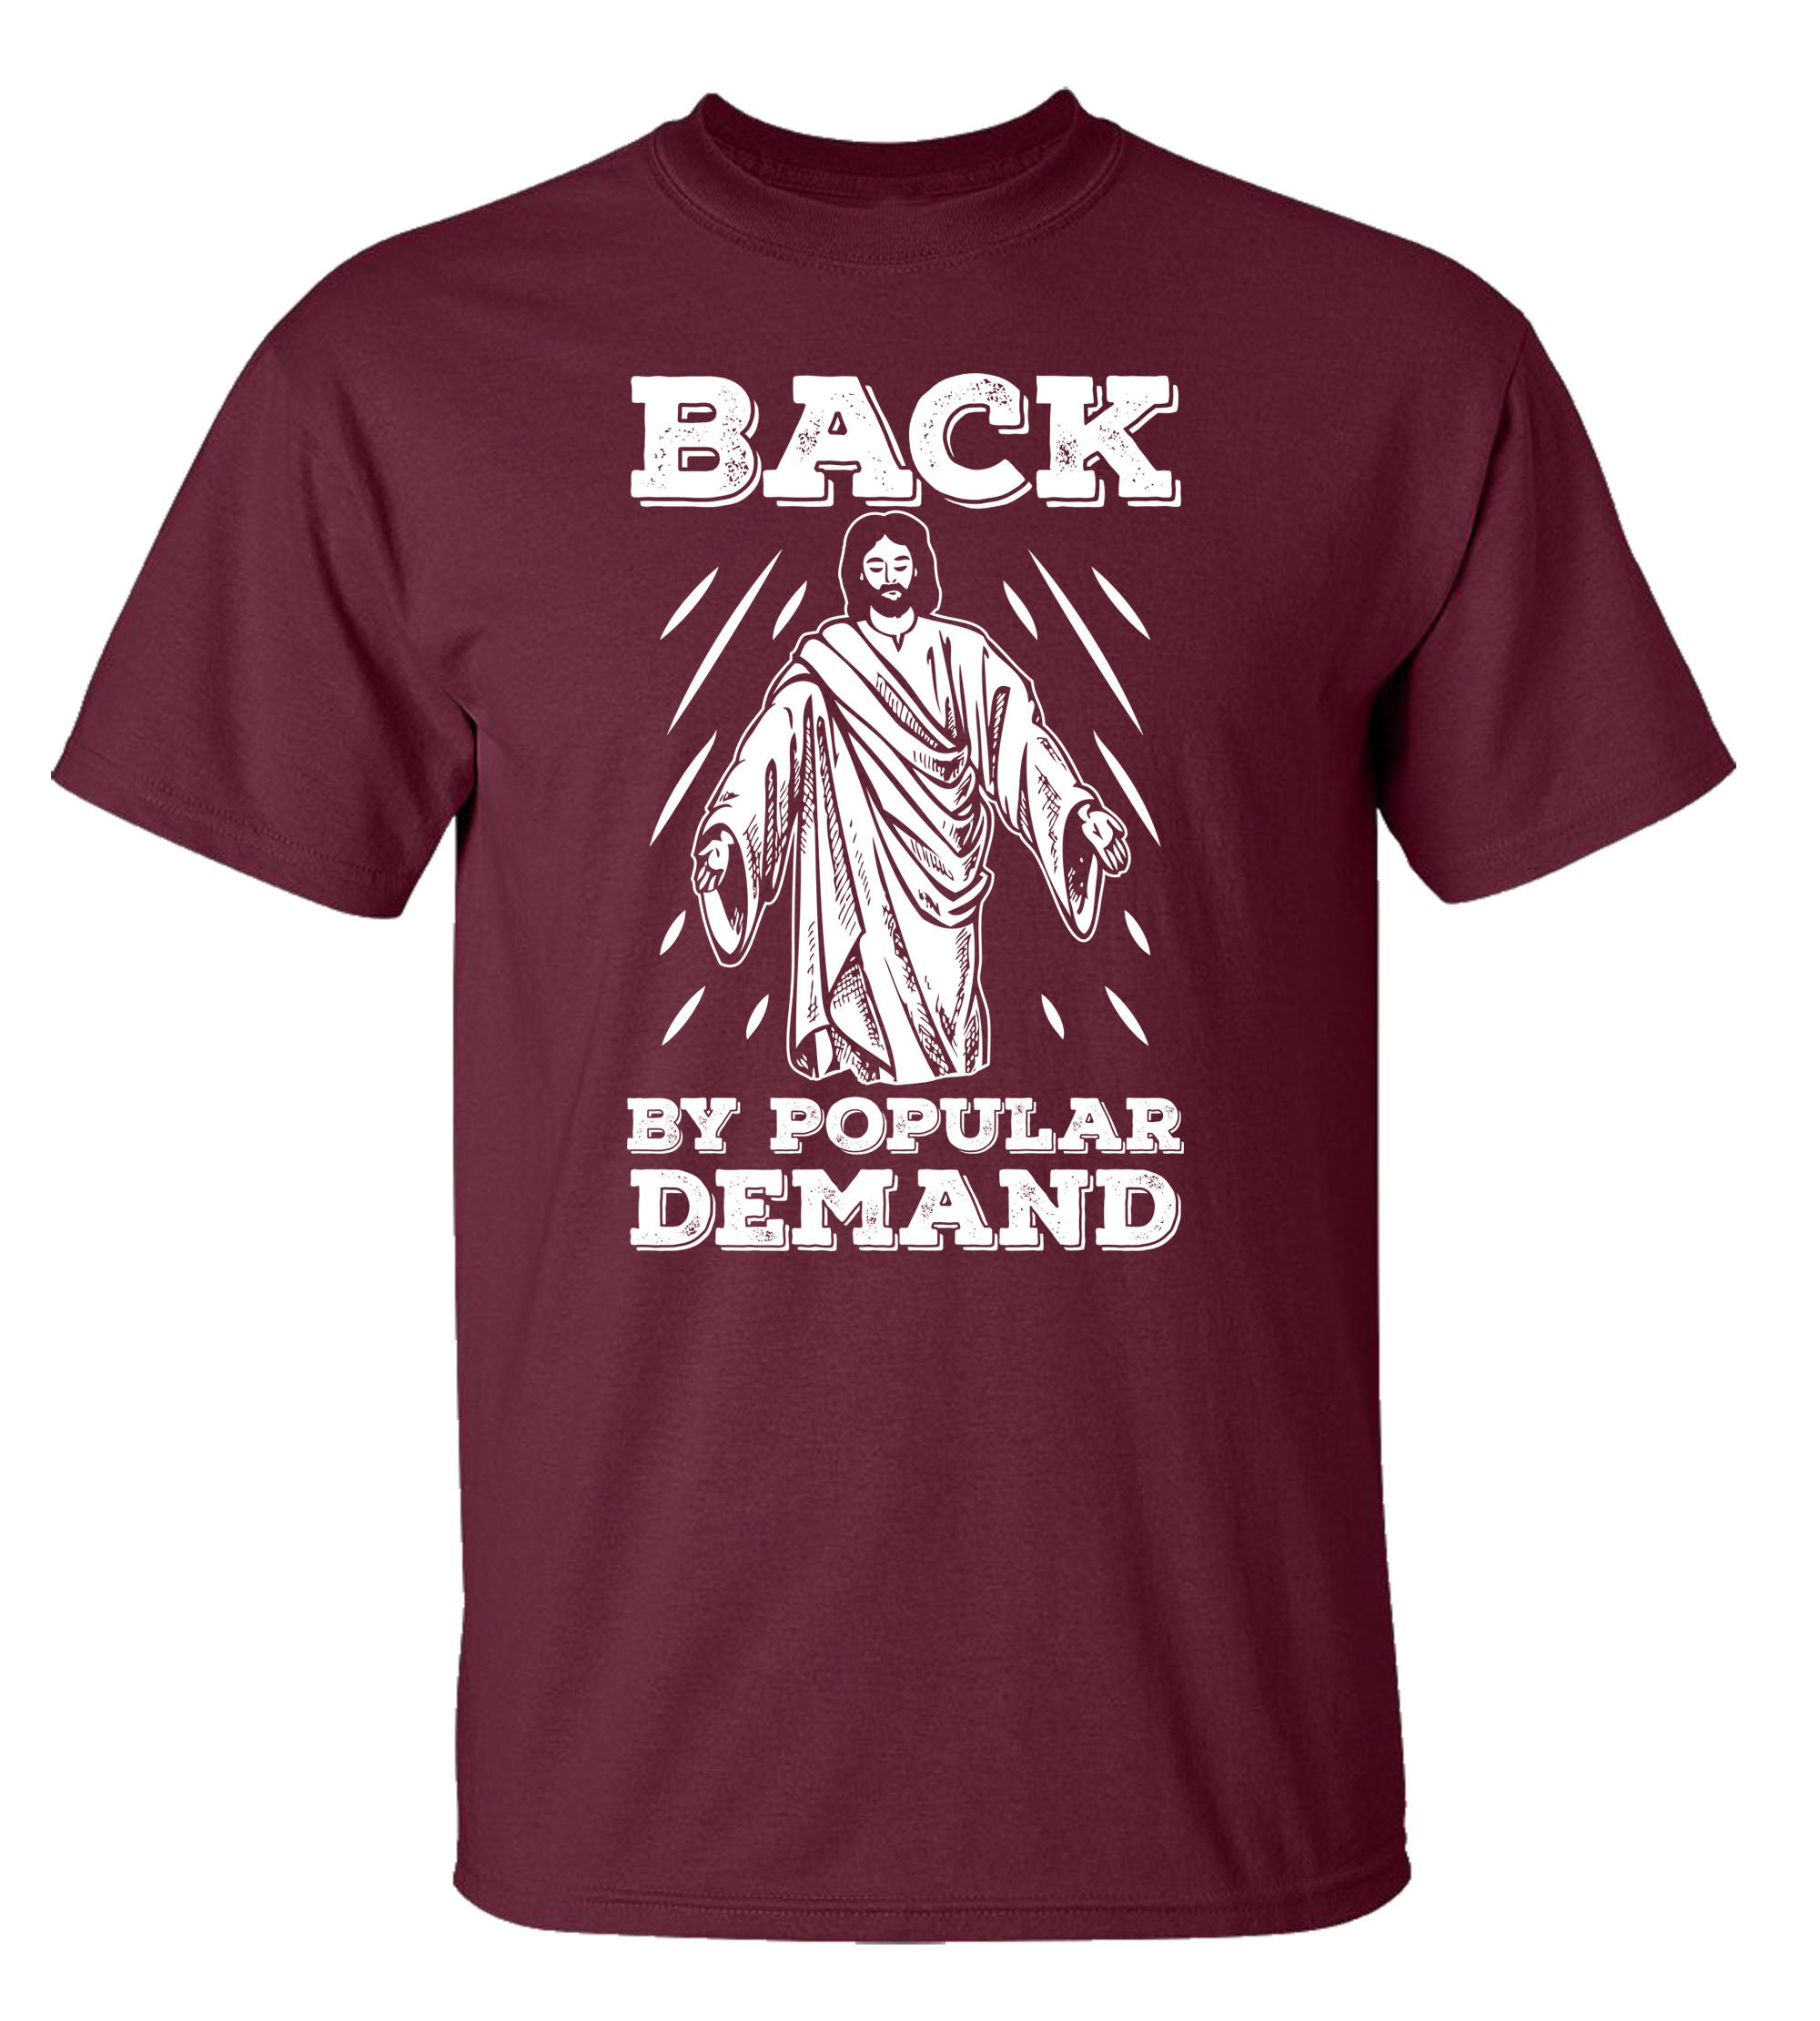 Funny Jesus: Back by Popular Demand Adult Short Sleeve T-Shirt-Maroon-Medium - image 1 of 4